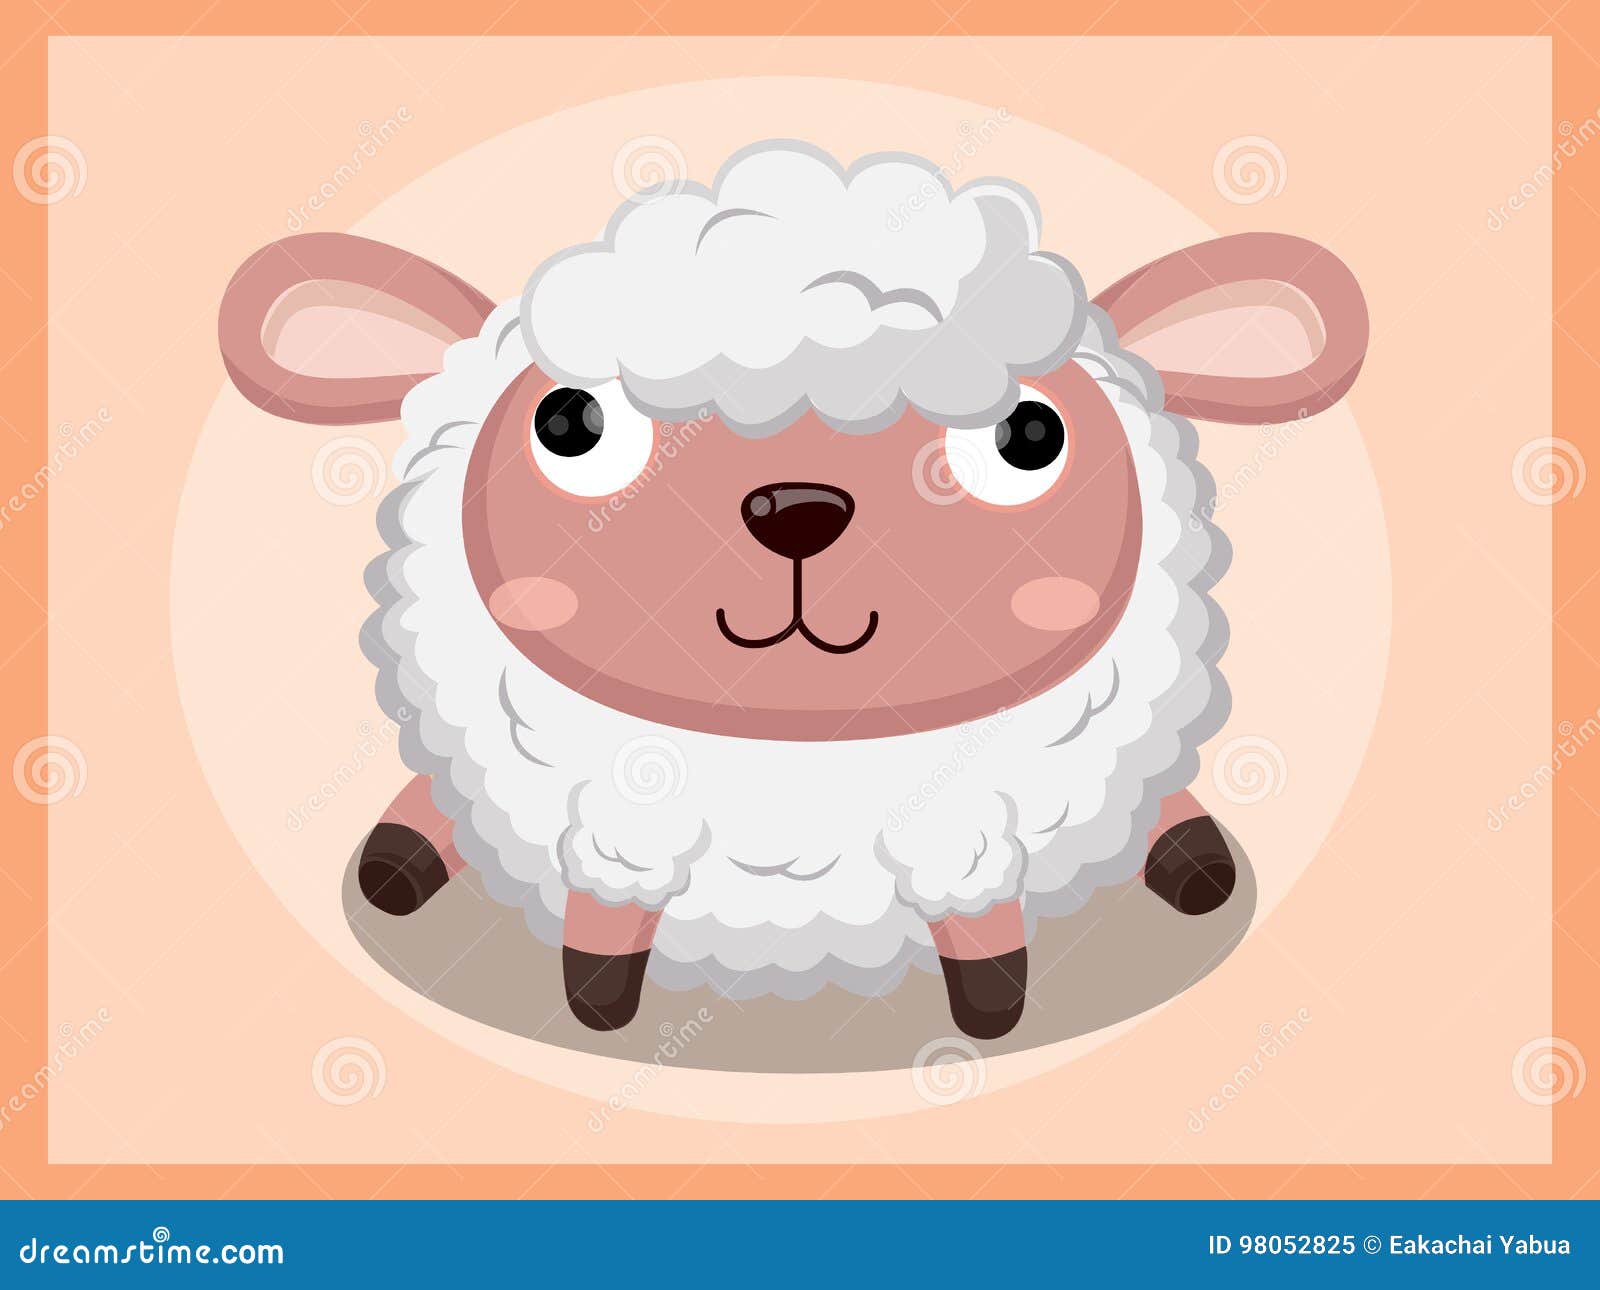 Sheep Cartoon. Funny Cartoon and Vector Animal Characters Stock Vector